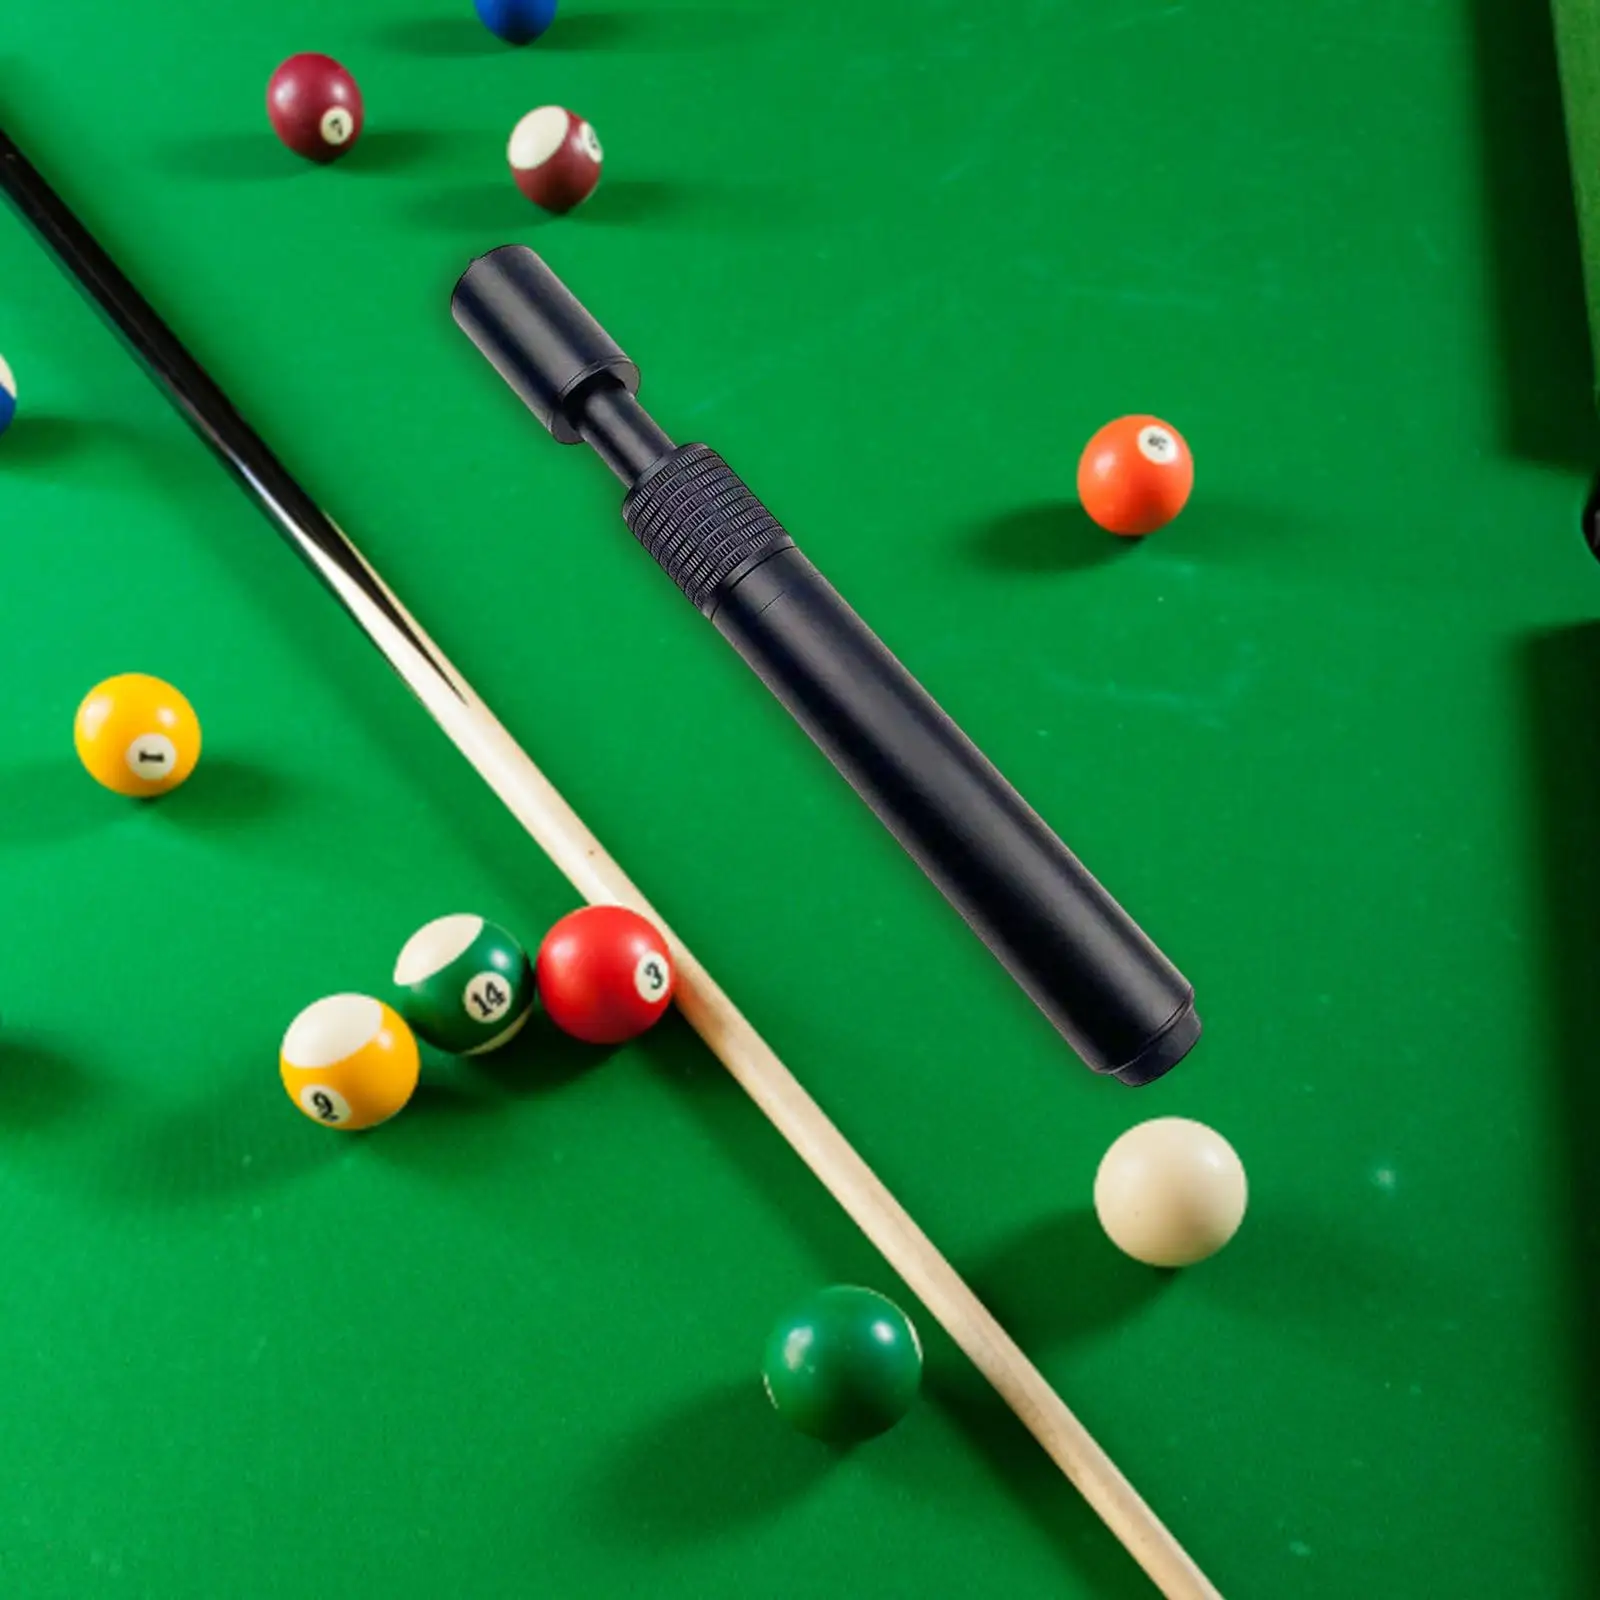 Billiards Pool Cue Extension Snooker Billiard Pool Cue for Beginners Athlete